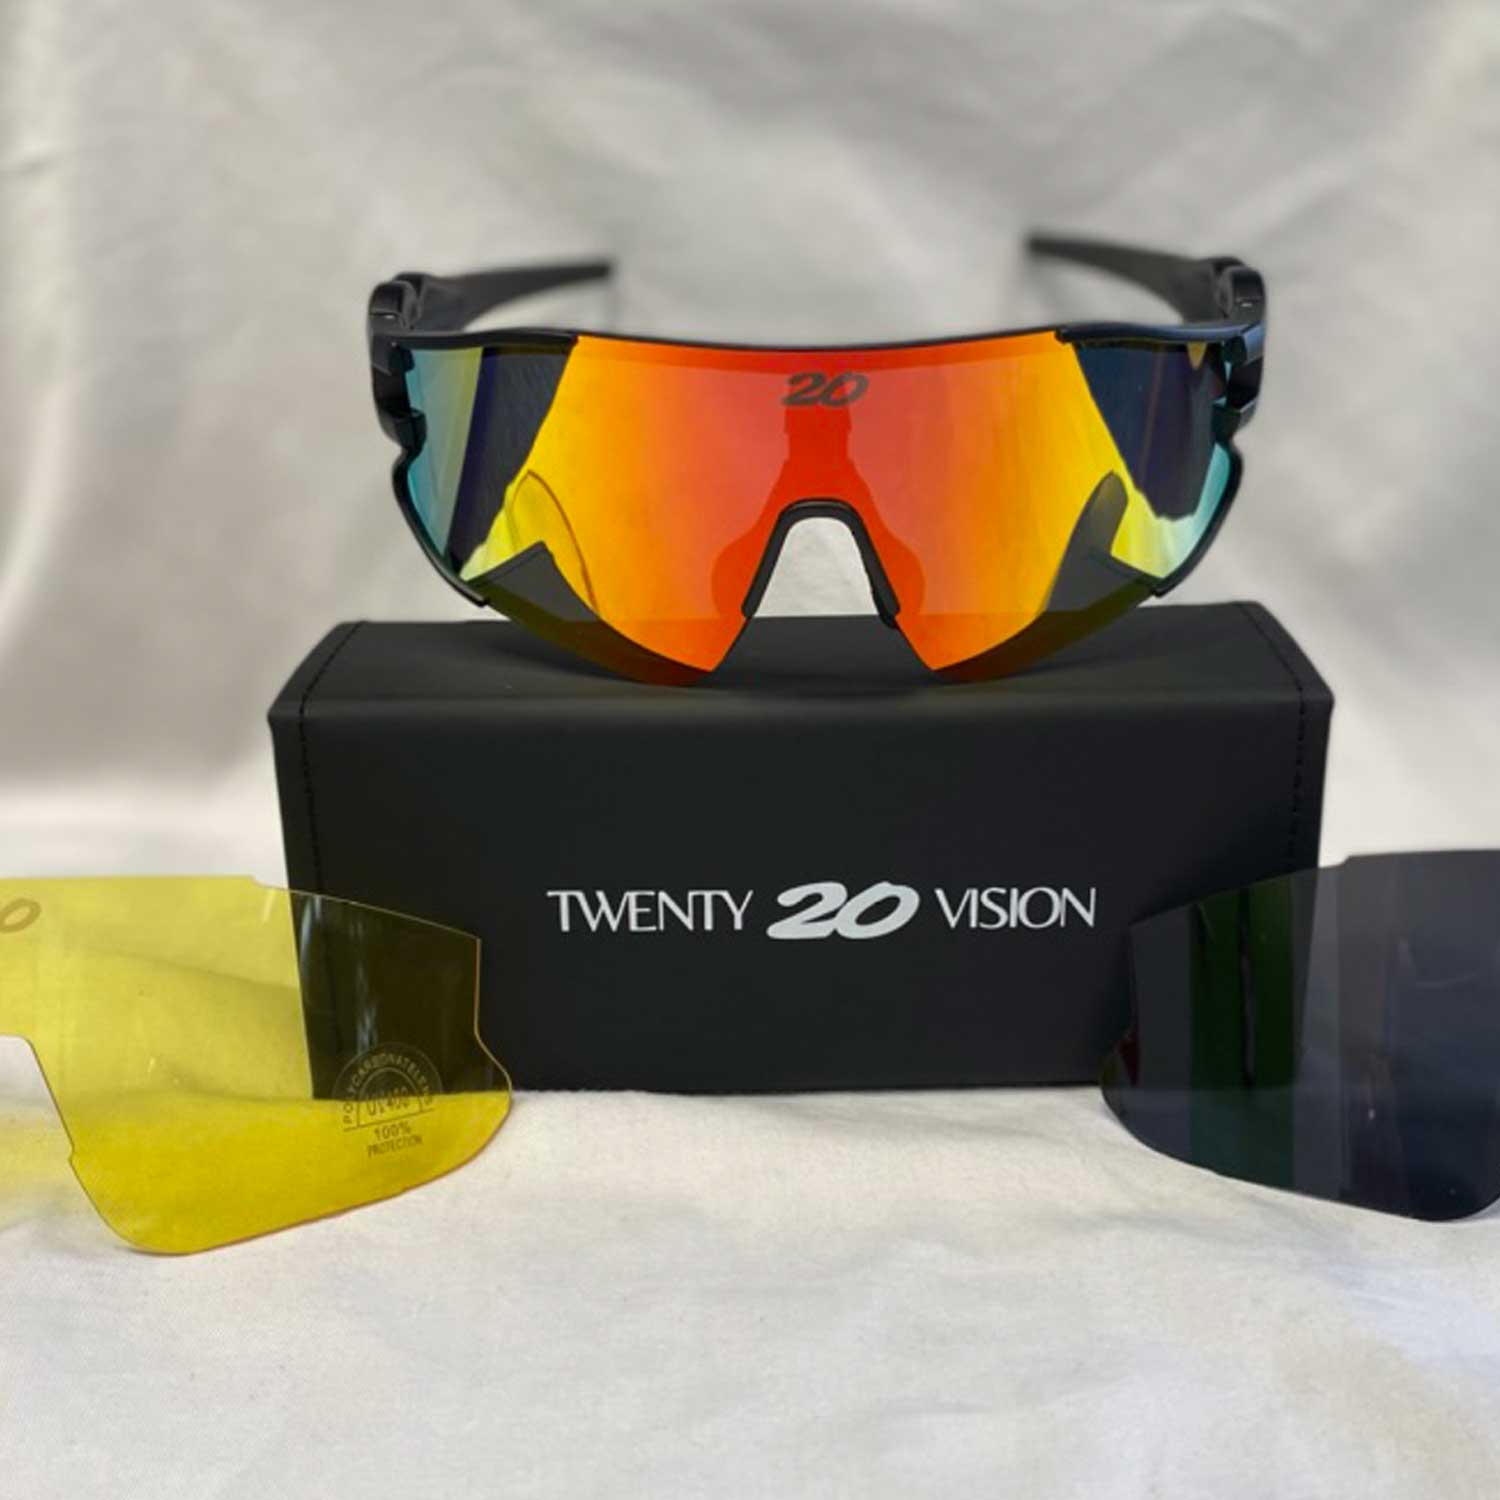 Twenty20 All Rounder - Blade style sunglasses